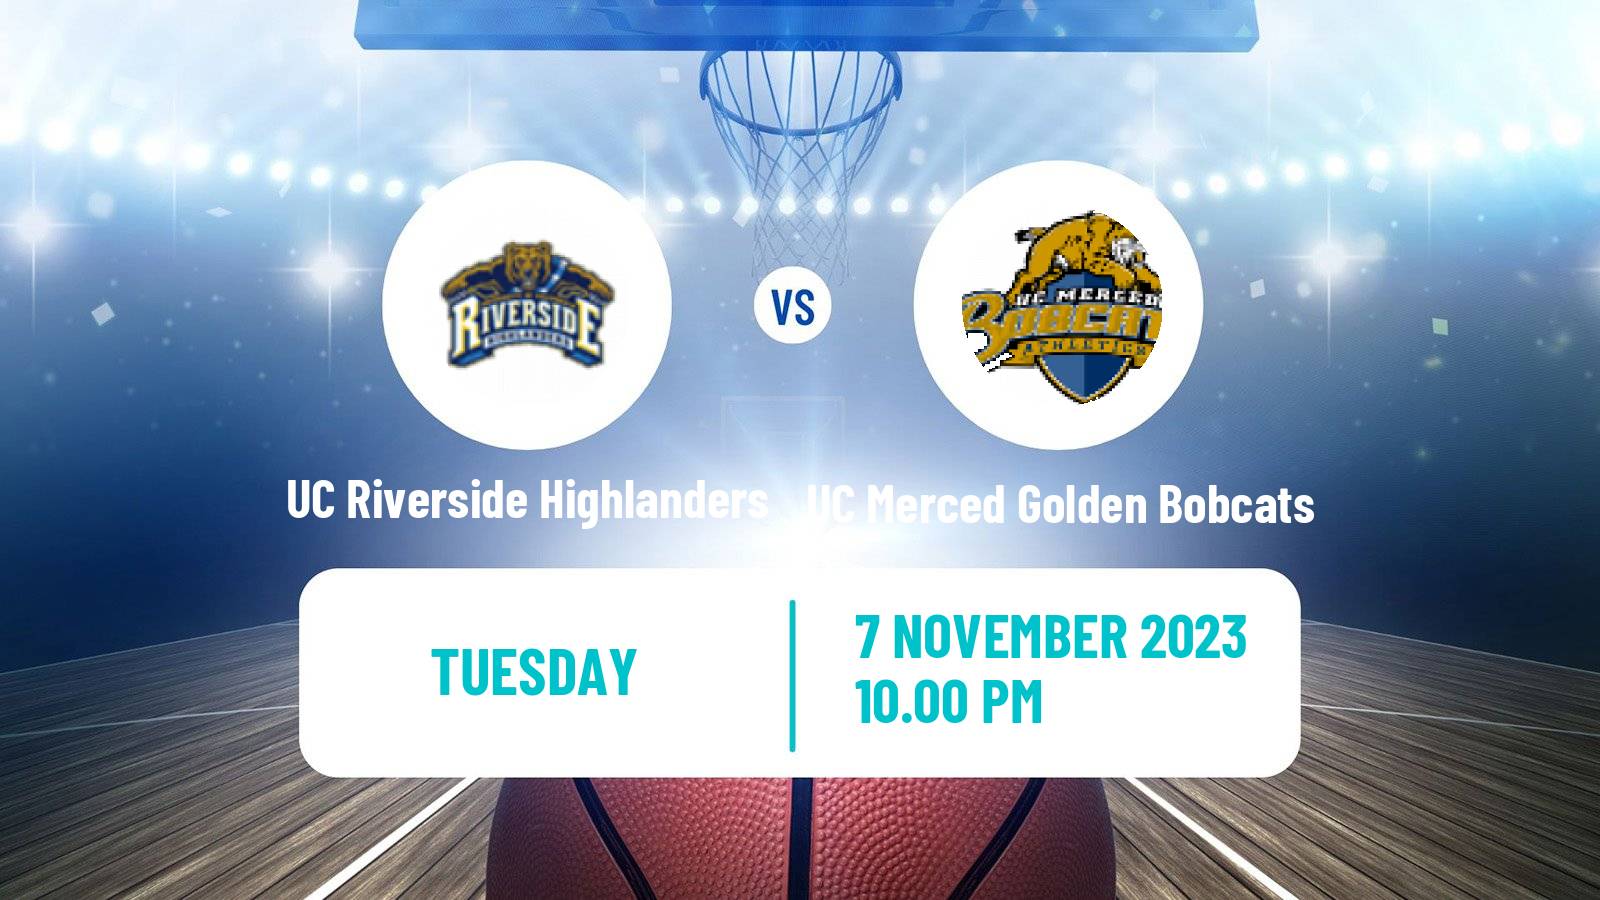 Basketball NCAA College Basketball UC Riverside Highlanders - UC Merced Golden Bobcats